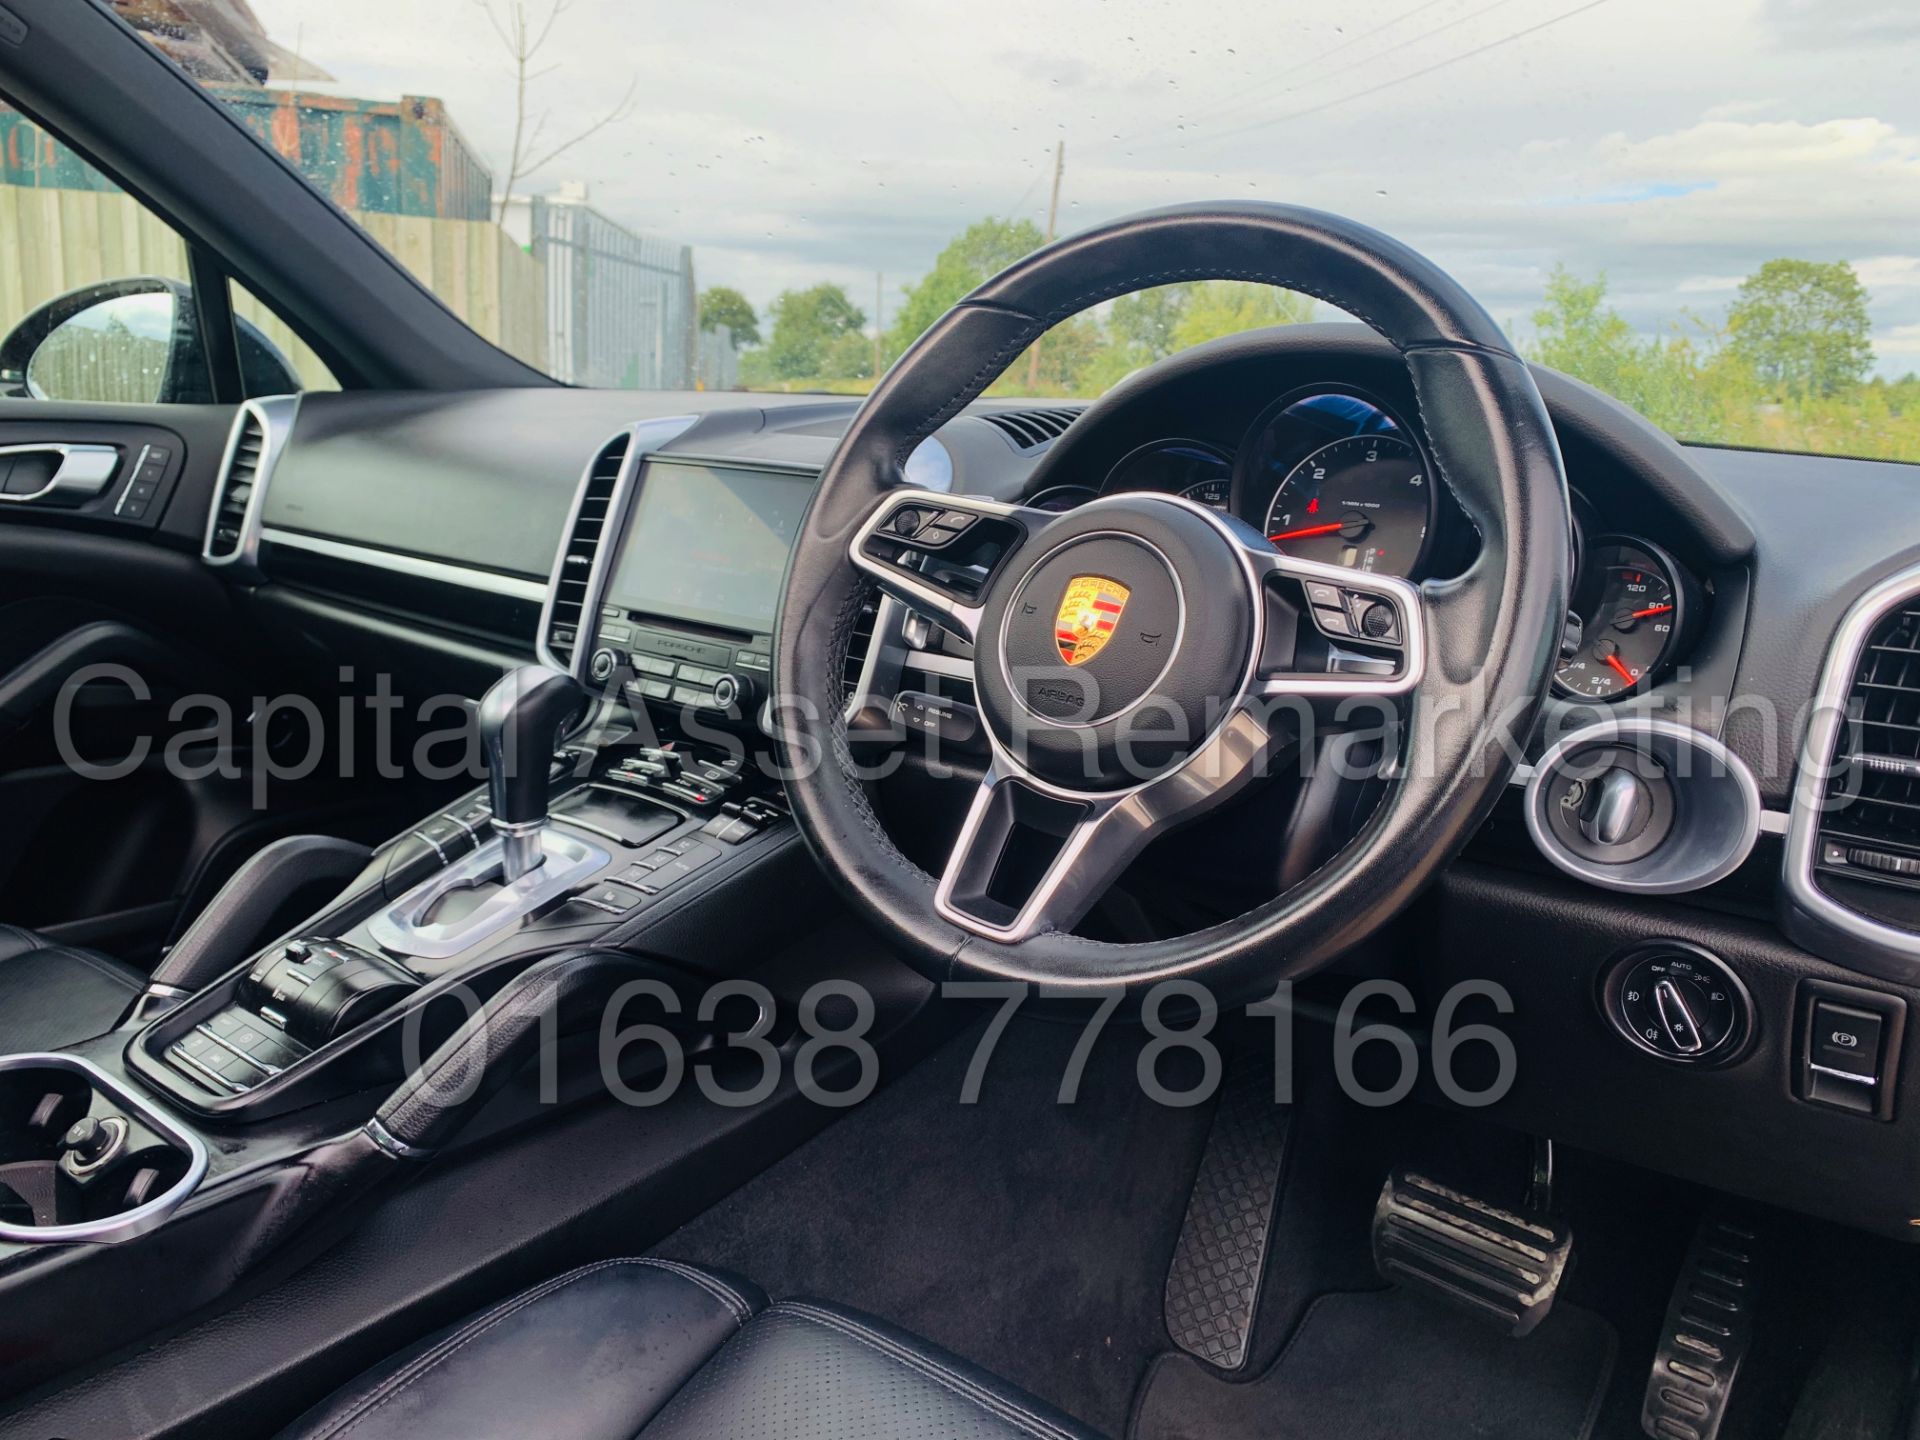 (On Sale) PORSCHE CAYENNE *SPORTS SUV* (2018) '3.0 V6 DIESEL -262 BHP- 8 SPEED AUTO' *ULTIMATE SPEC* - Image 44 of 62